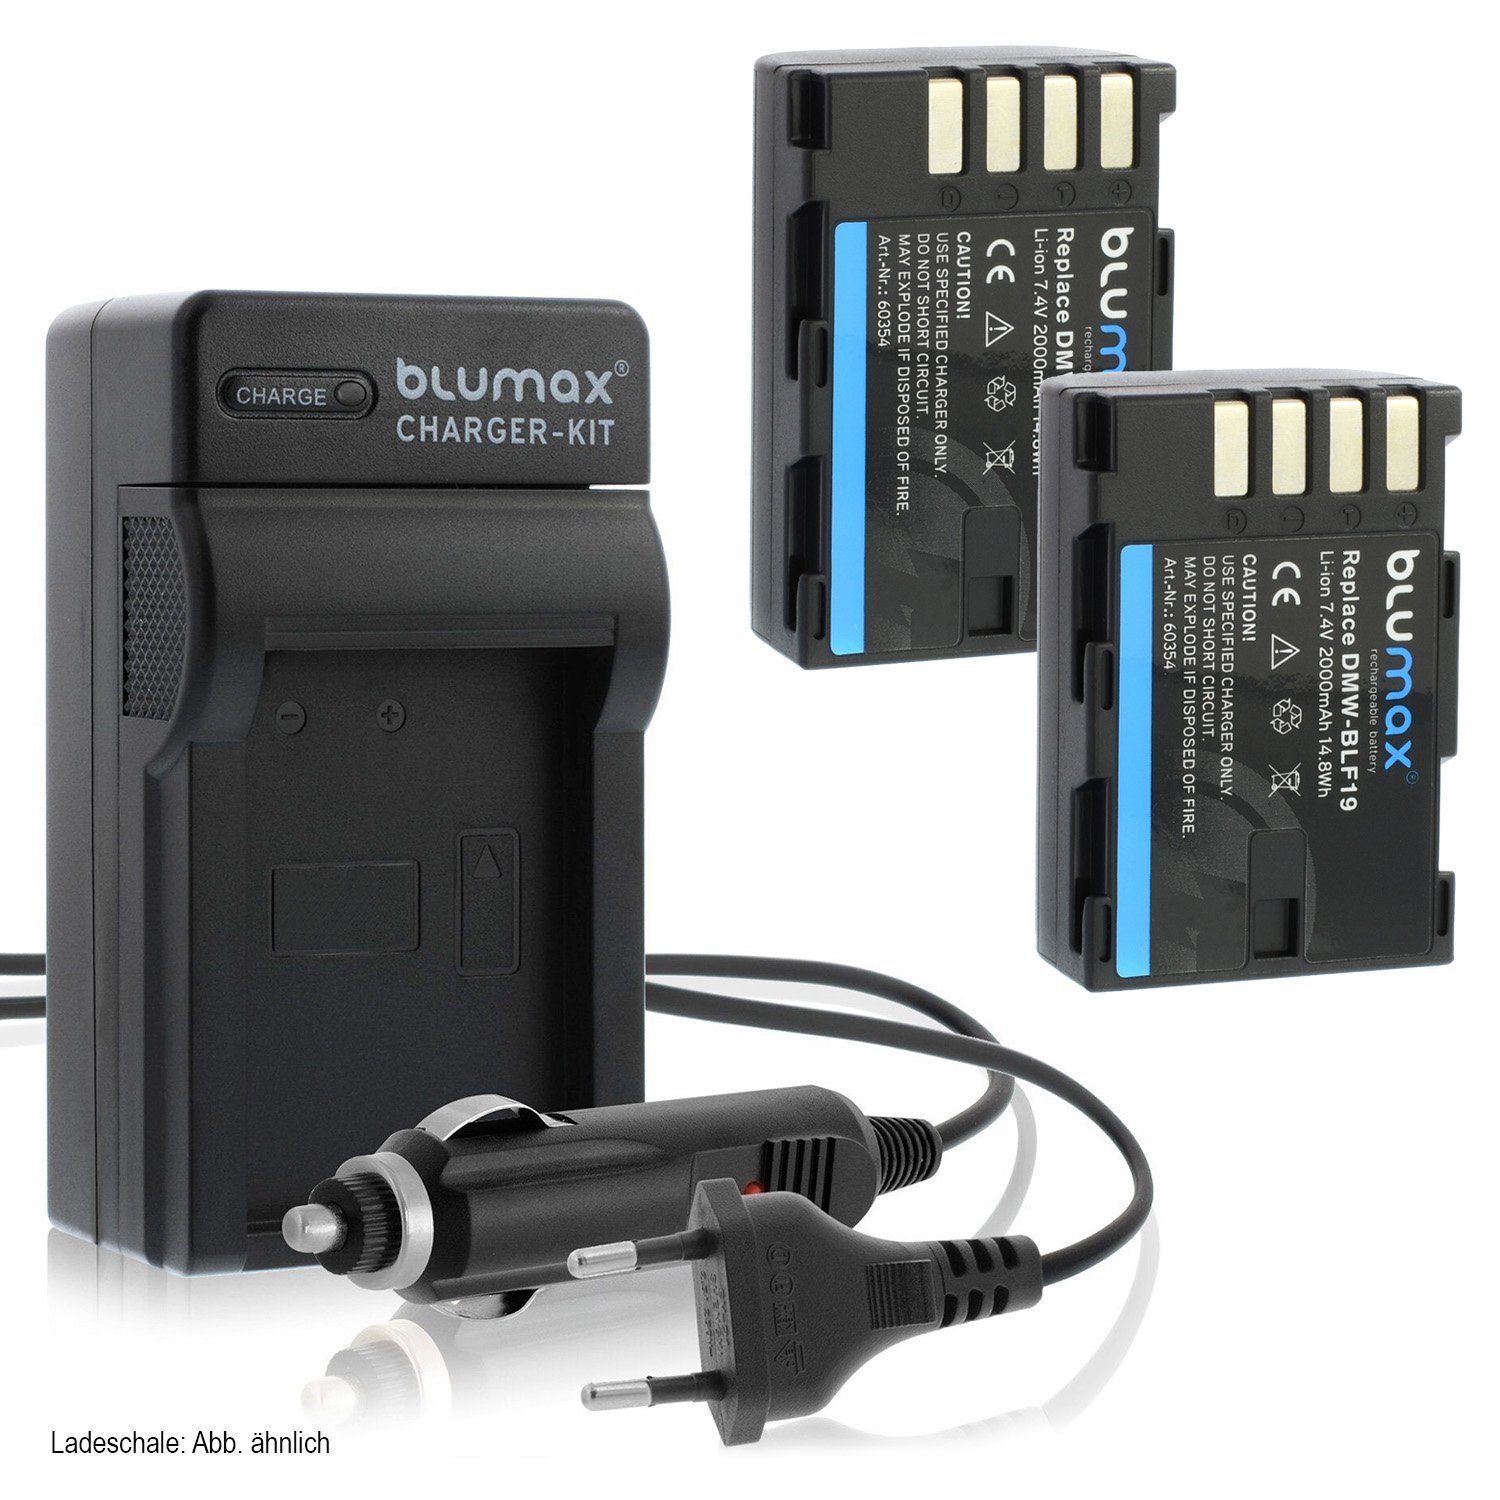 Panasonic 2000 Set DMW- BLF19 Kamera-Akku für Lader Blumax mAh mit